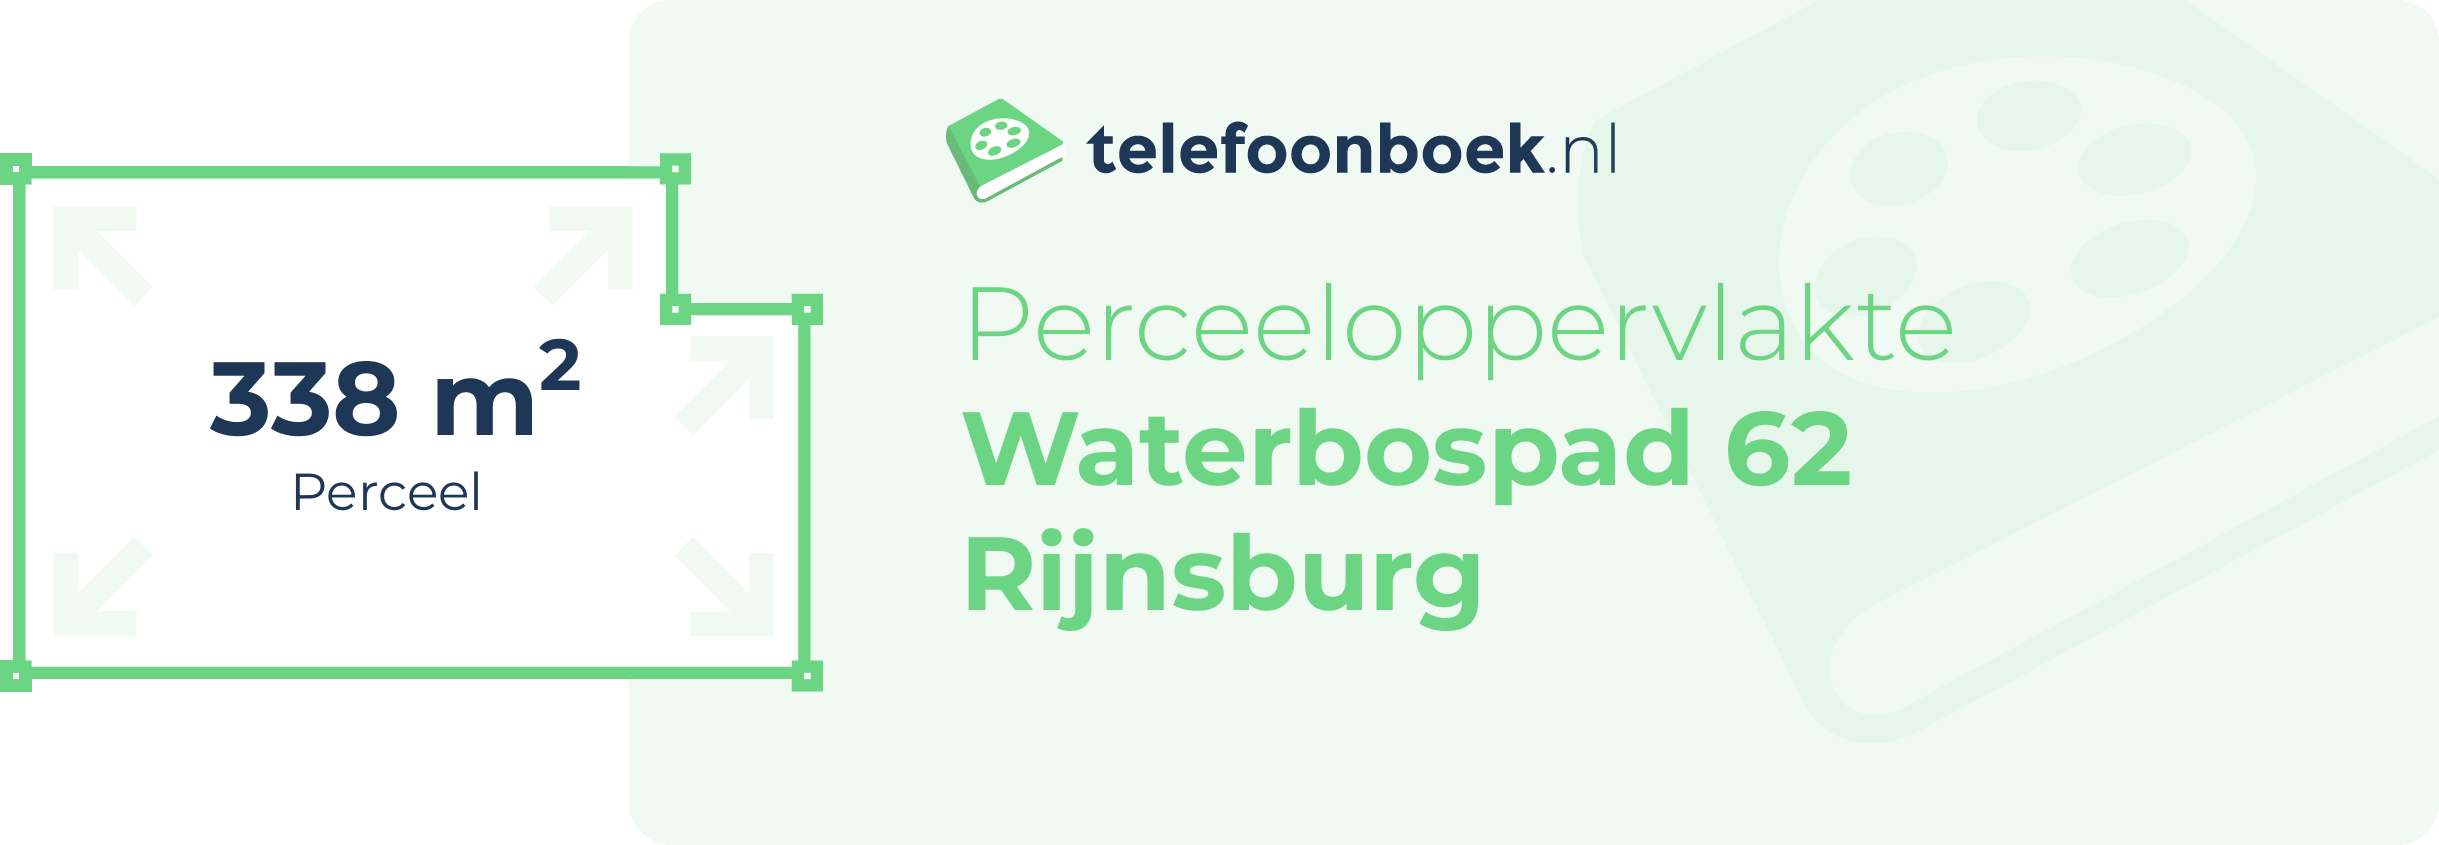 Perceeloppervlakte Waterbospad 62 Rijnsburg